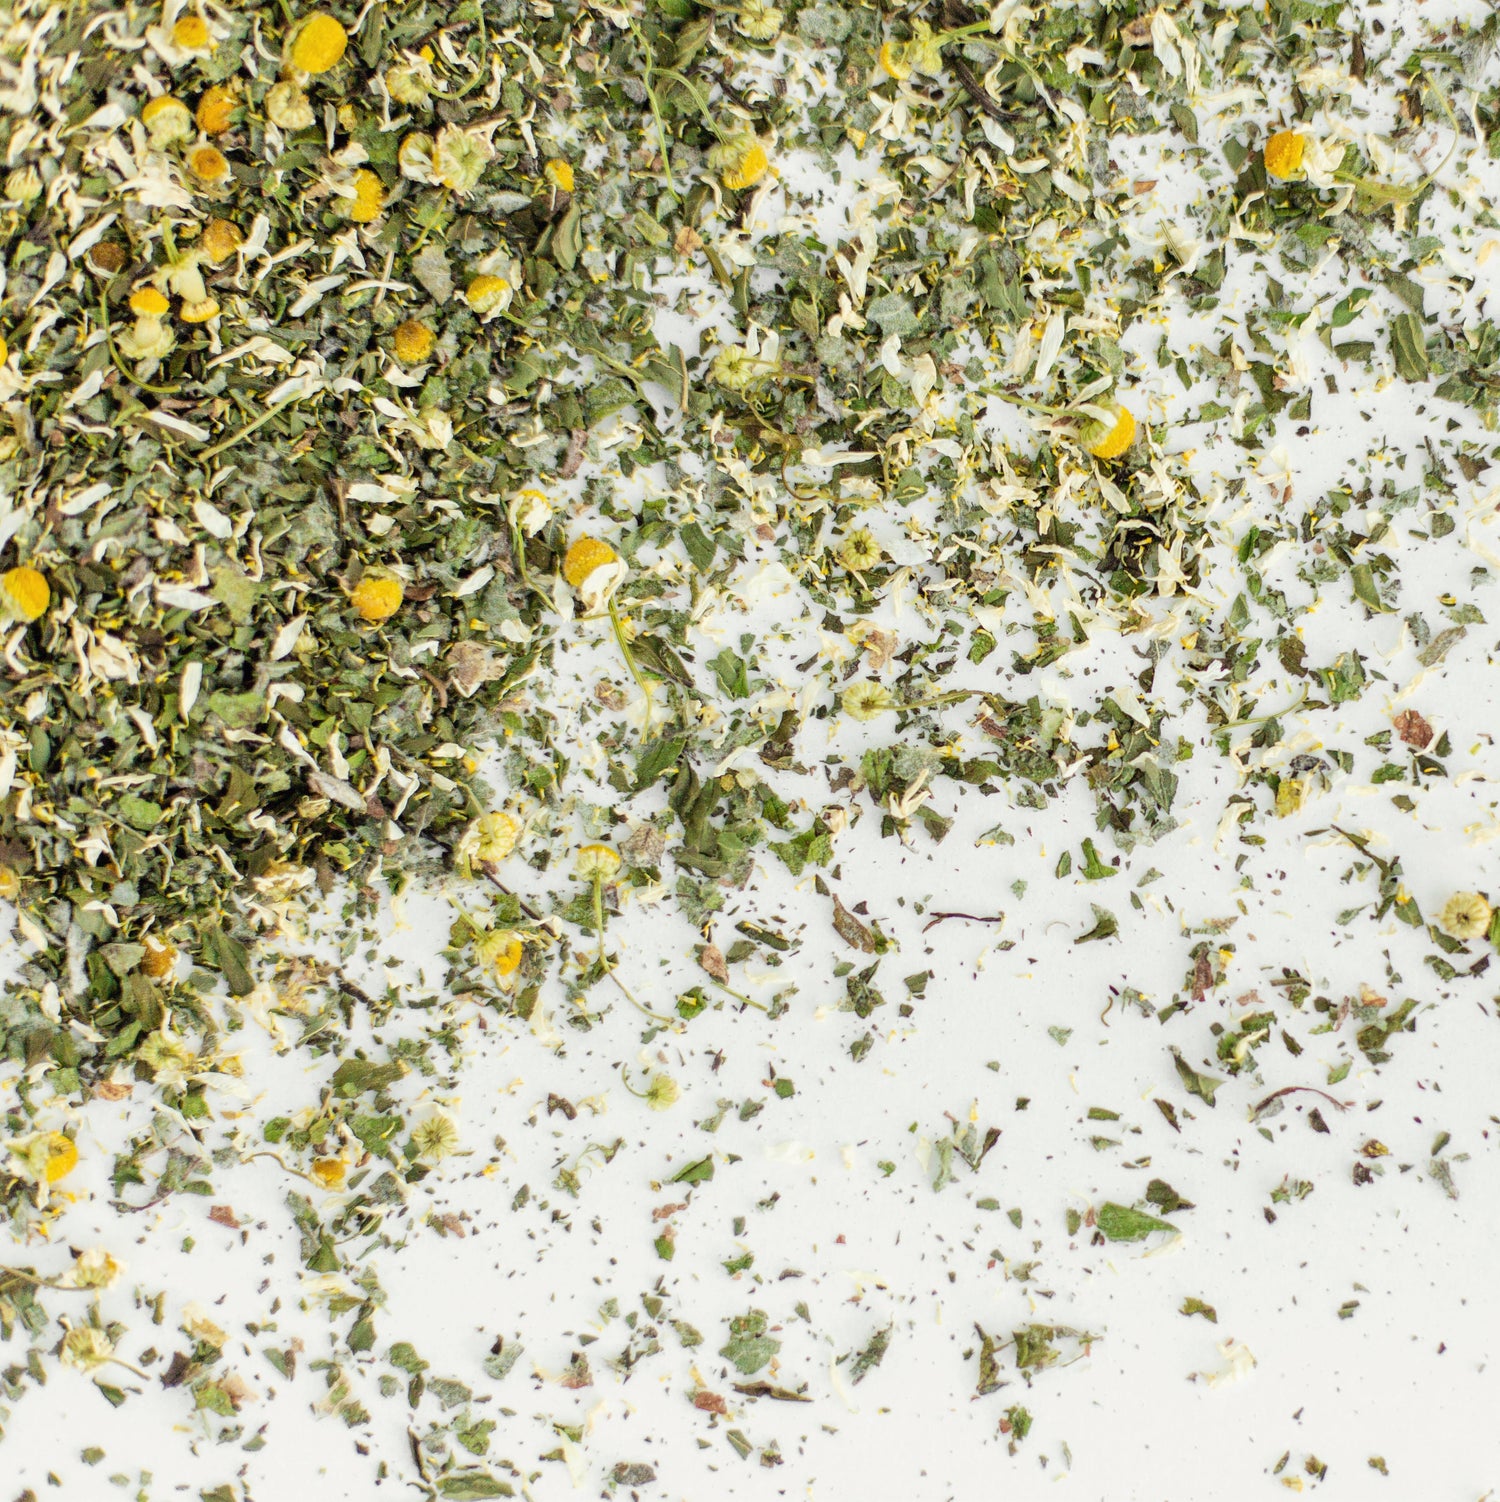 Garden mint tea loose leaf herb, herbal tea blend for mental clarity,